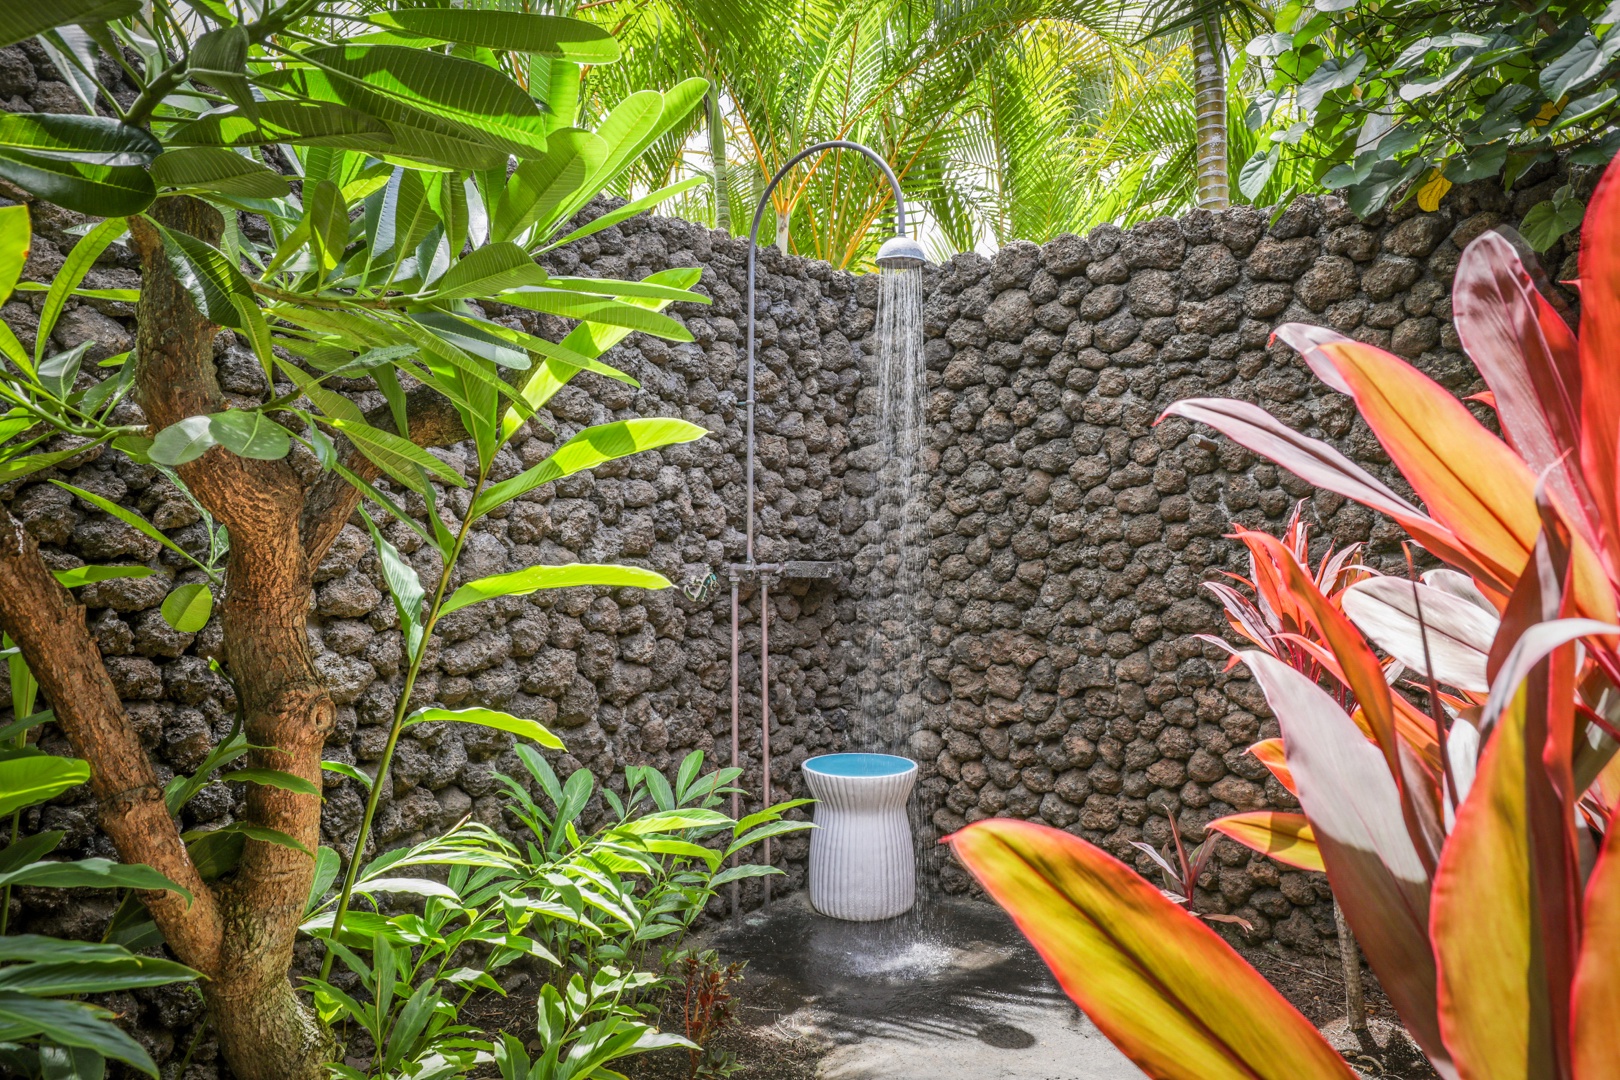 Kailua Kona Vacation Rentals, 4BD Hainoa Estate (122) at Four Seasons Resort at Hualalai - Outdoor shower garden off Guest Room 3.